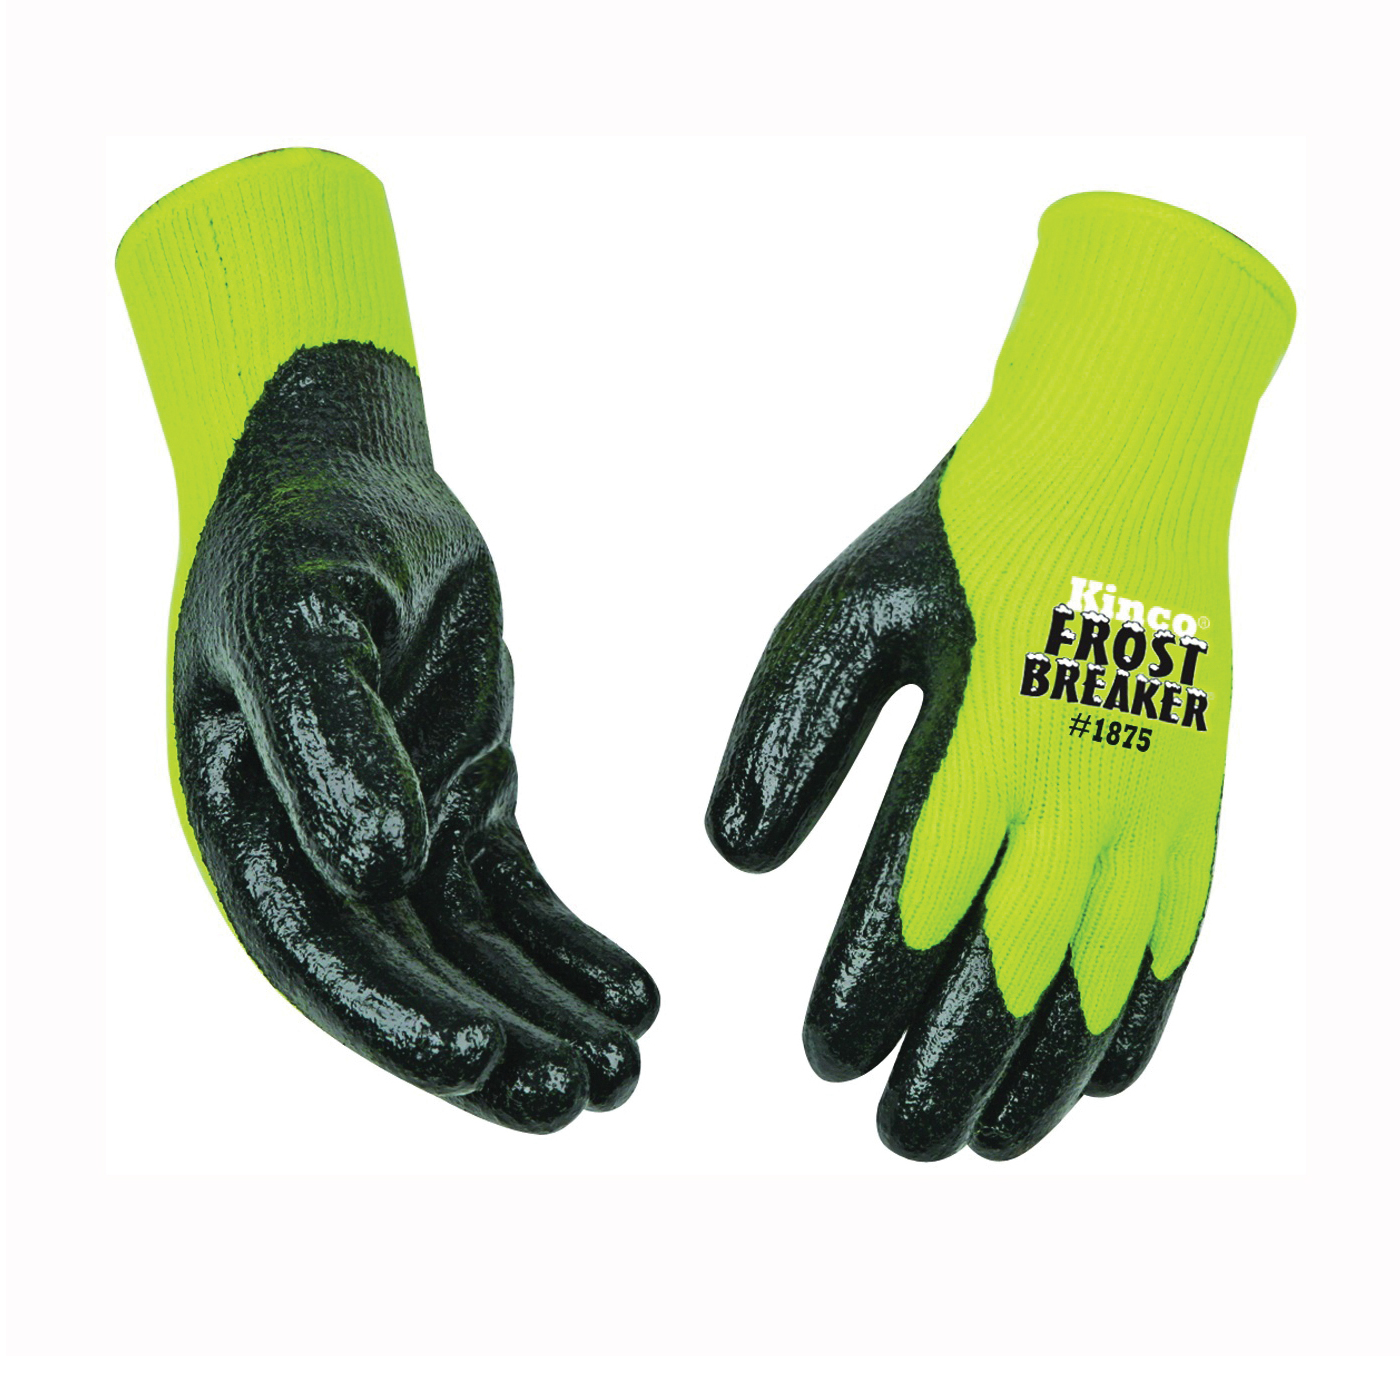 1875-L High-Visibility High-Dexterity Protective Gloves, Men's, L, Keystone Thumb, Knit Wrist Cuff